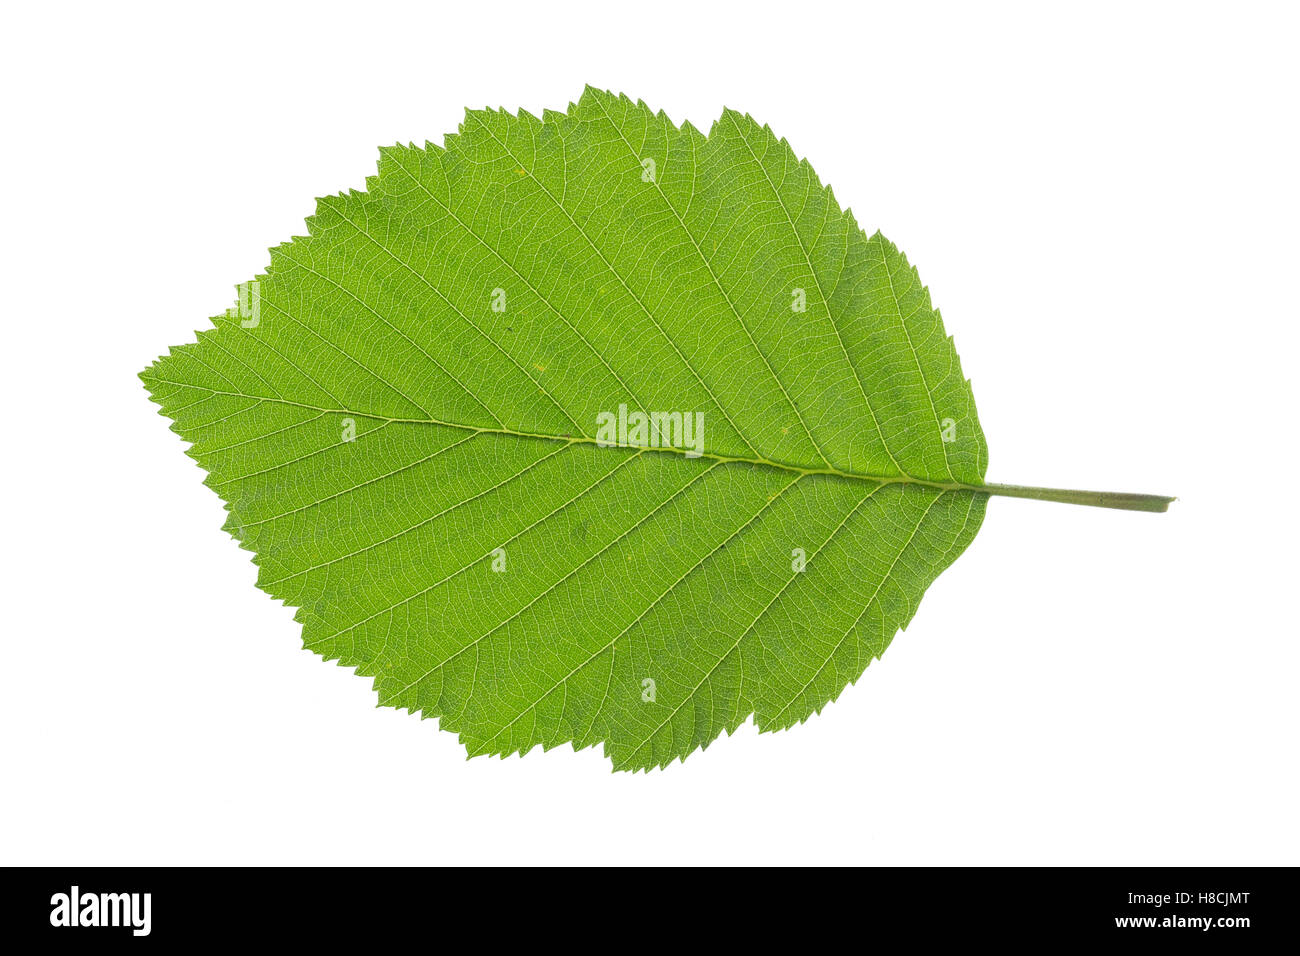 Grau-Erle, Grauerle, Erle, Alnus incana, Grey Alder, Gray Alder, Aulne blanc. Blatt, Blätter, leaf, leaves Stock Photo